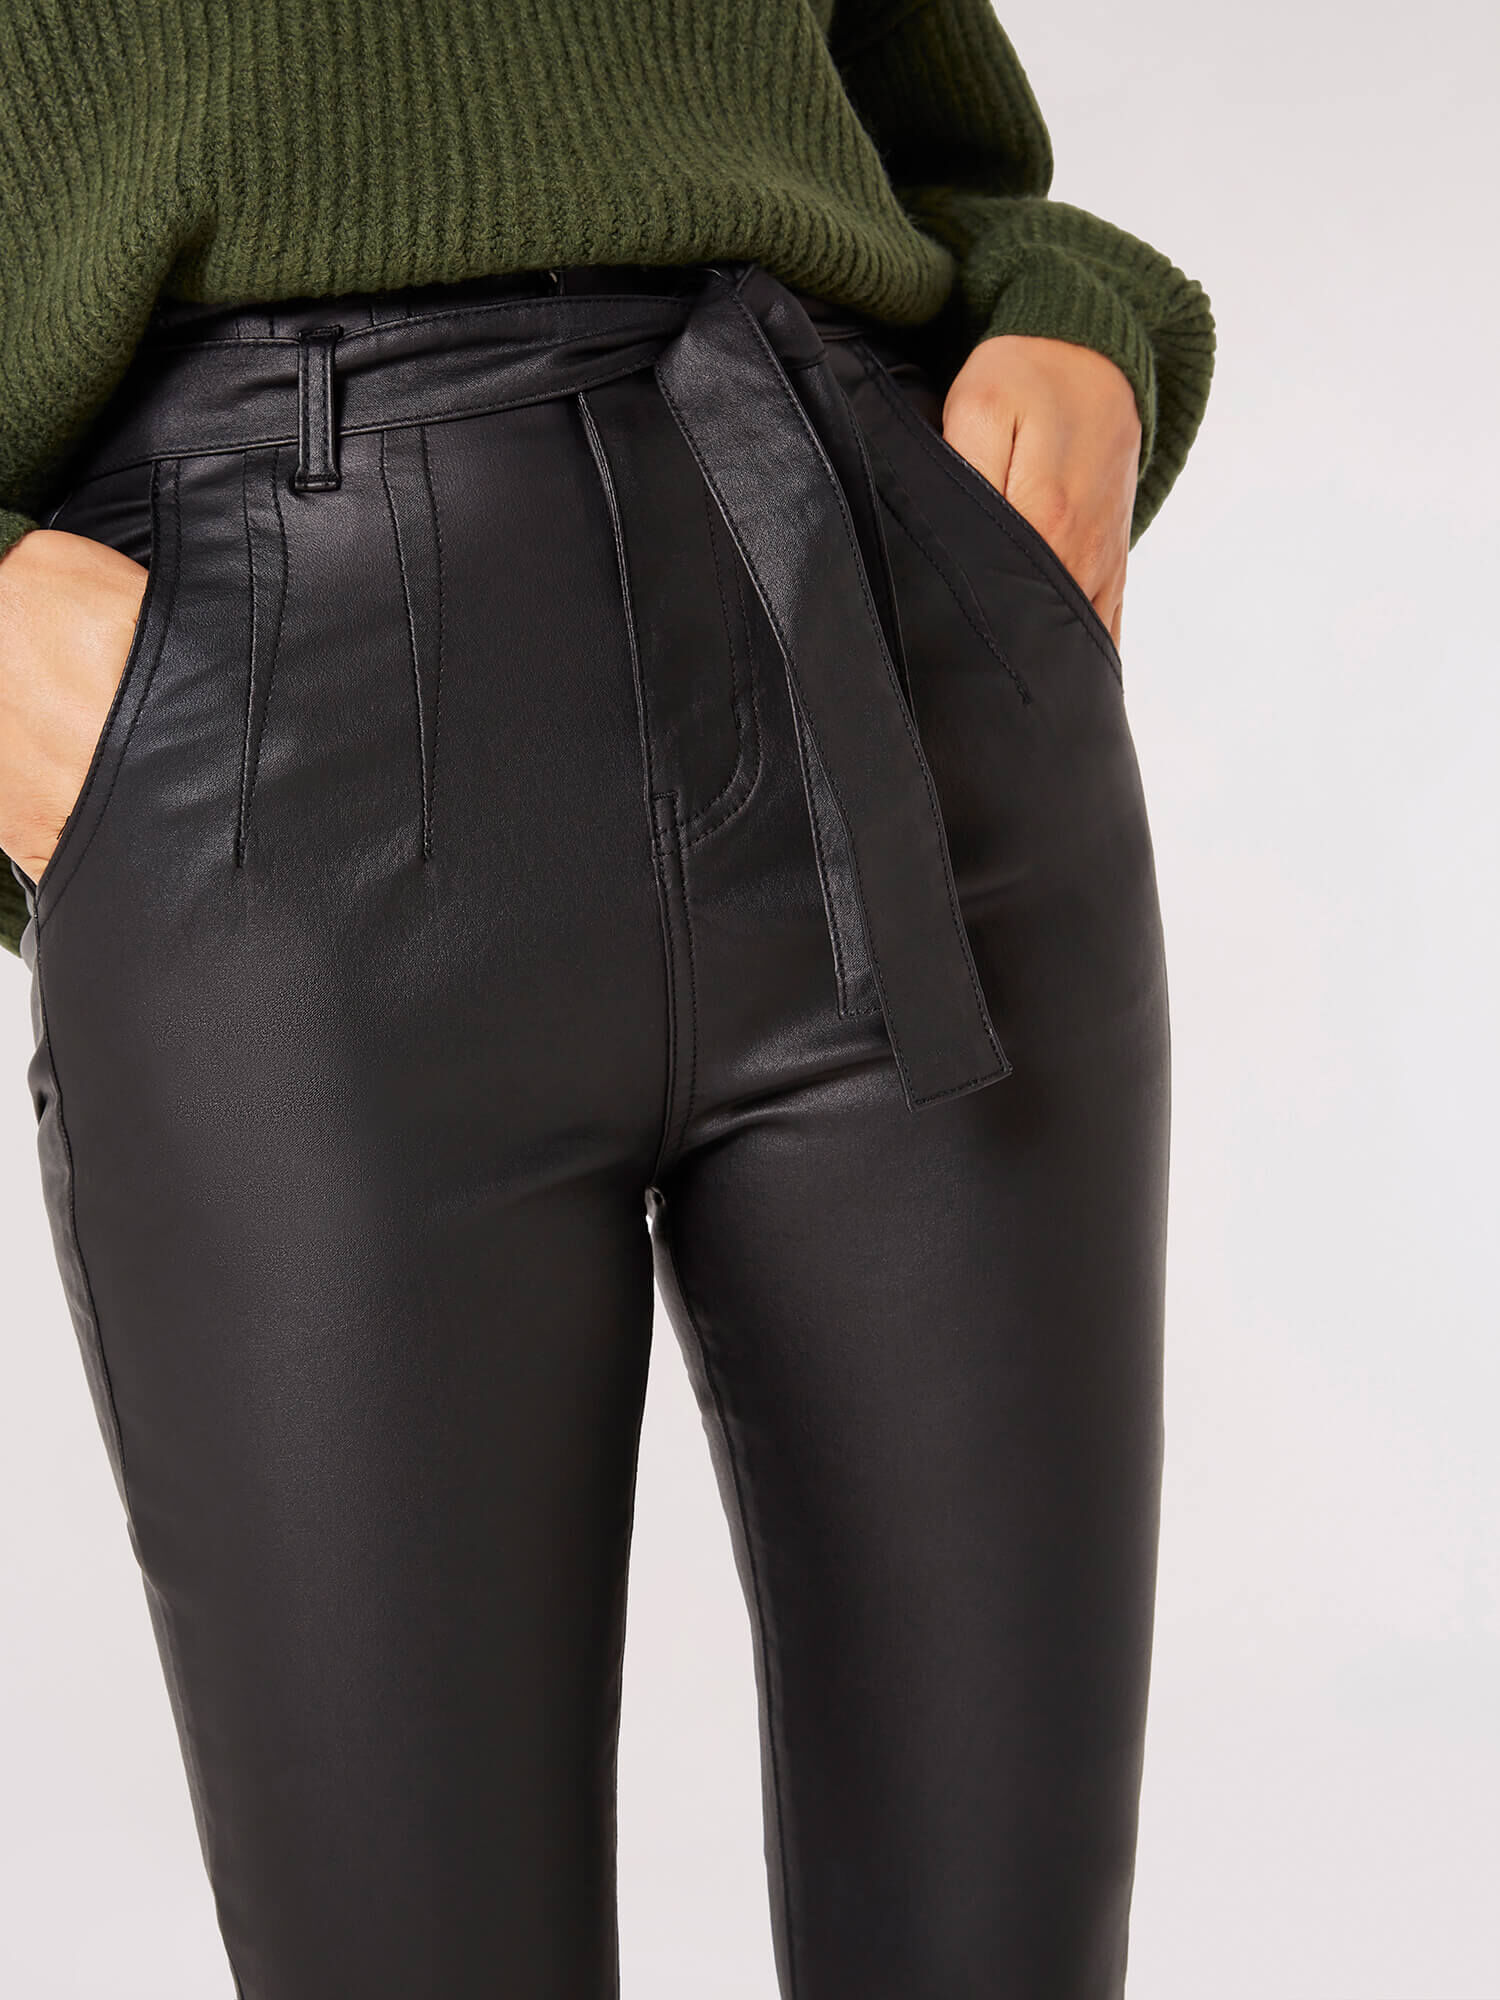 Boohoo Mar Lace Up Skinny Leather Look Trousers, $35 | BooHoo | Lookastic